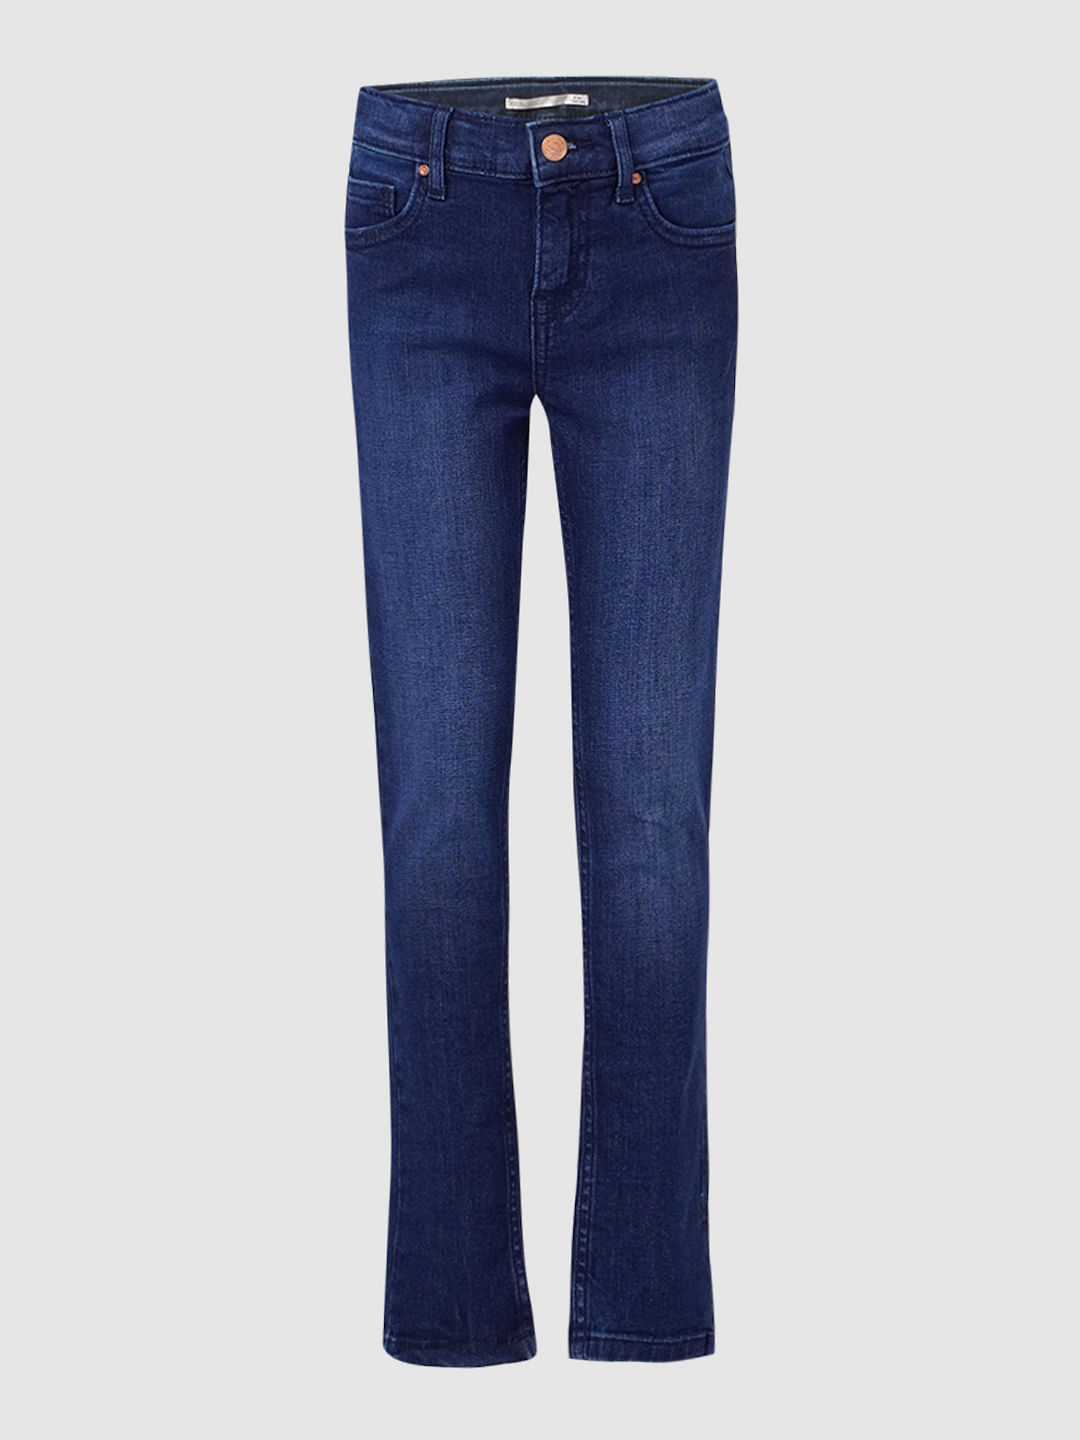 Buy Premium Denim Jeans for Girls – Mumkins